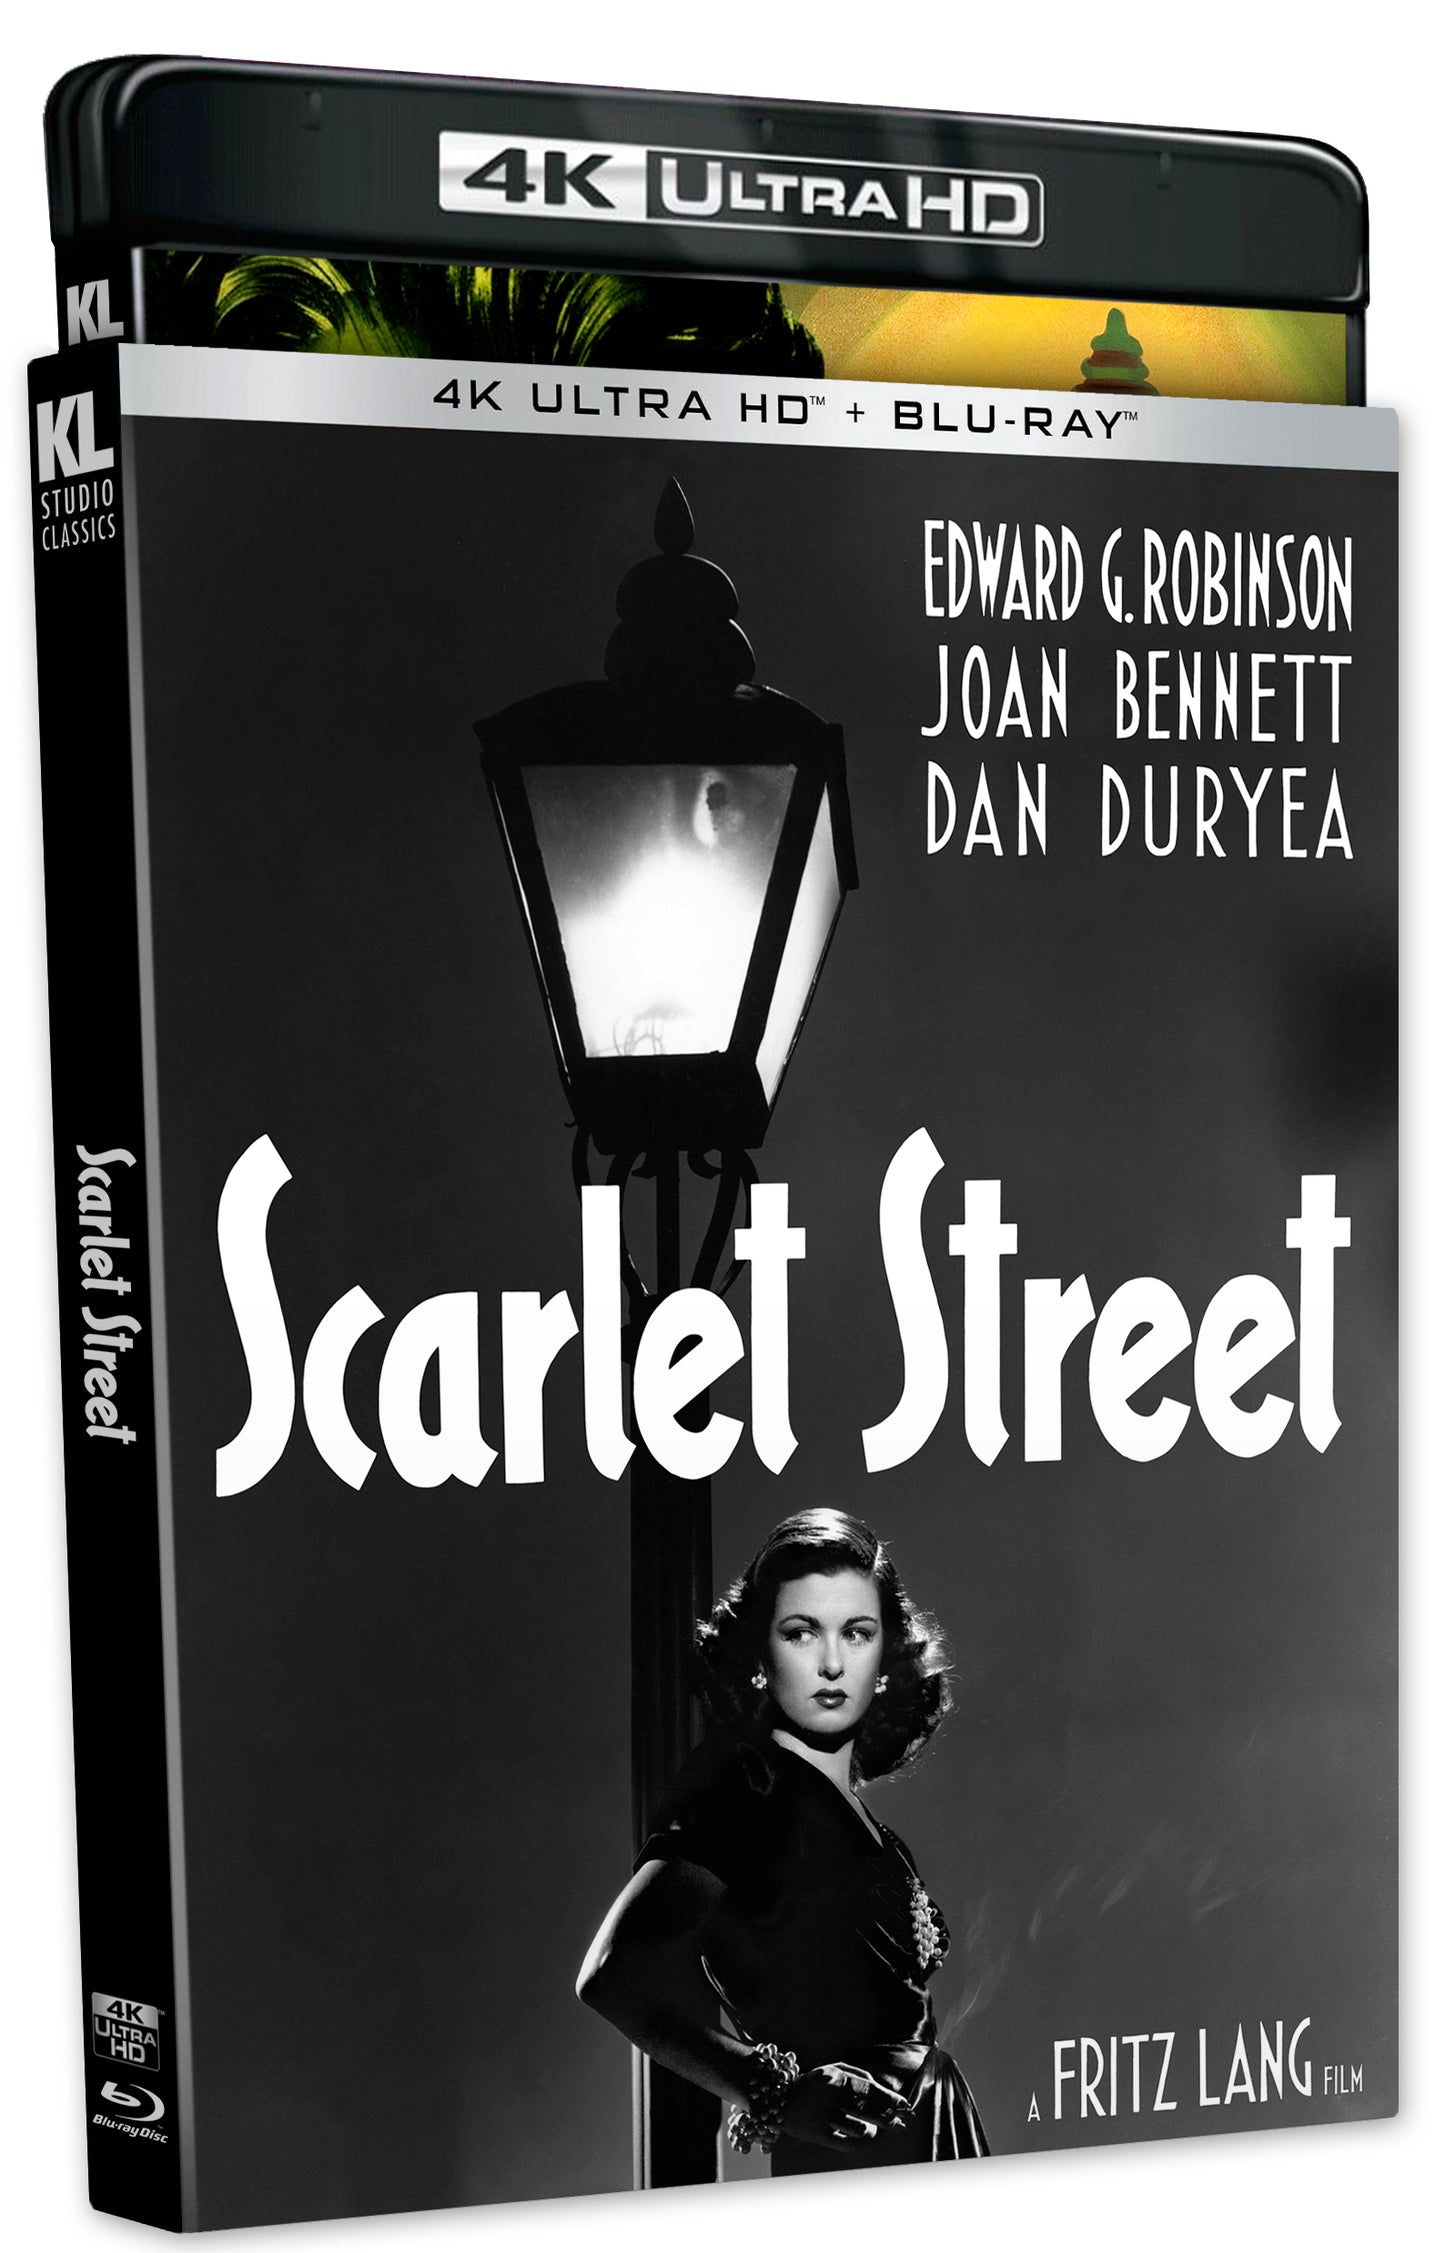 Scarlet Street 4K UHD + Blu-ray with Slipcover (Kino Lorber)